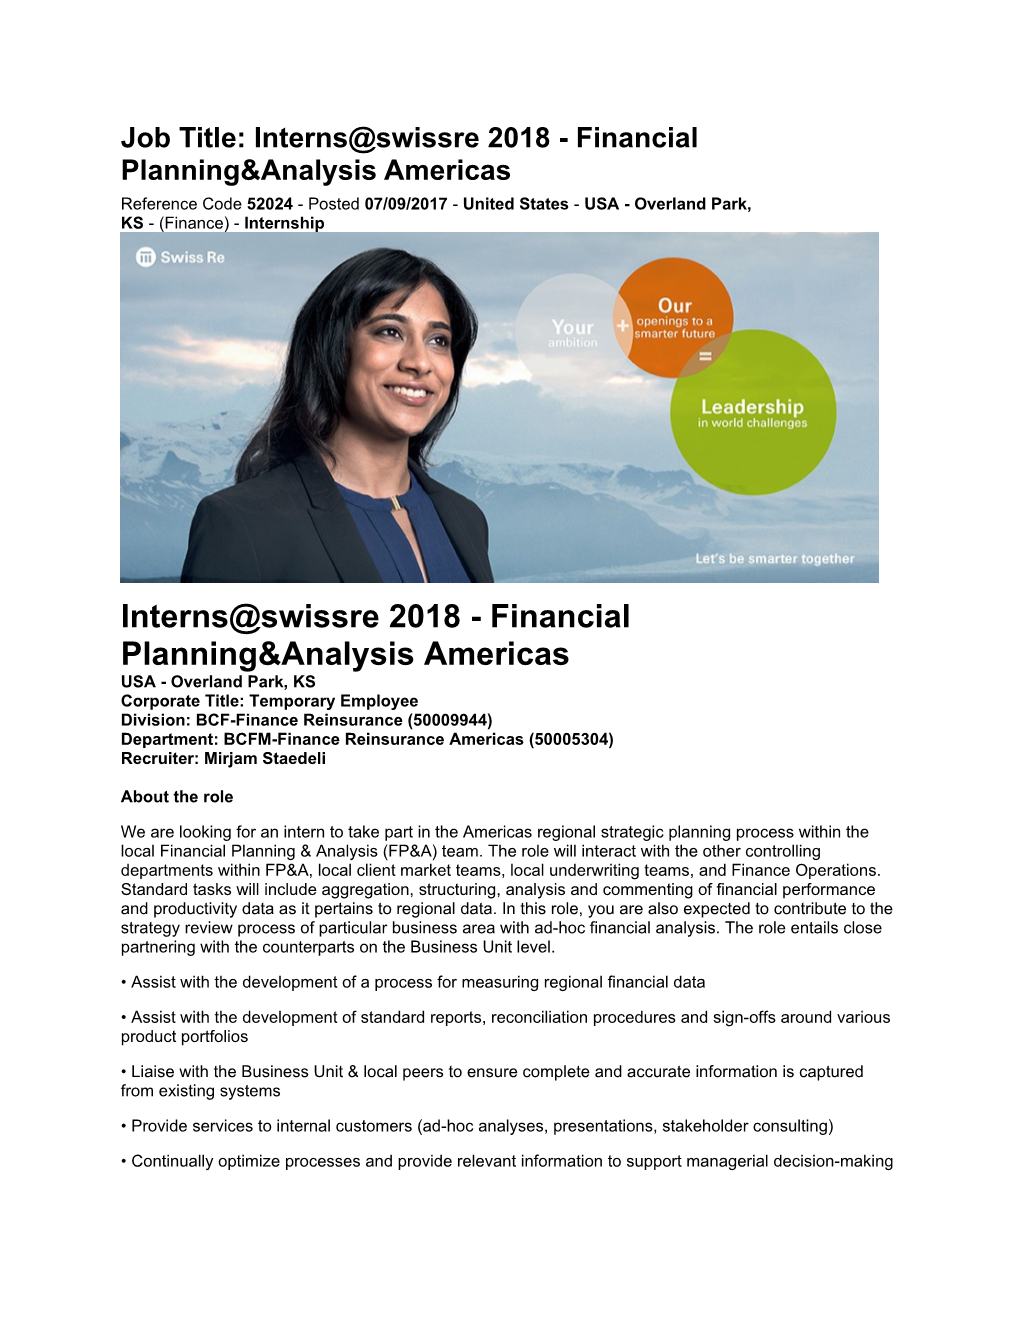 Job Title: Interns Swissre 2018 - Financial Planning&Analysis Americas